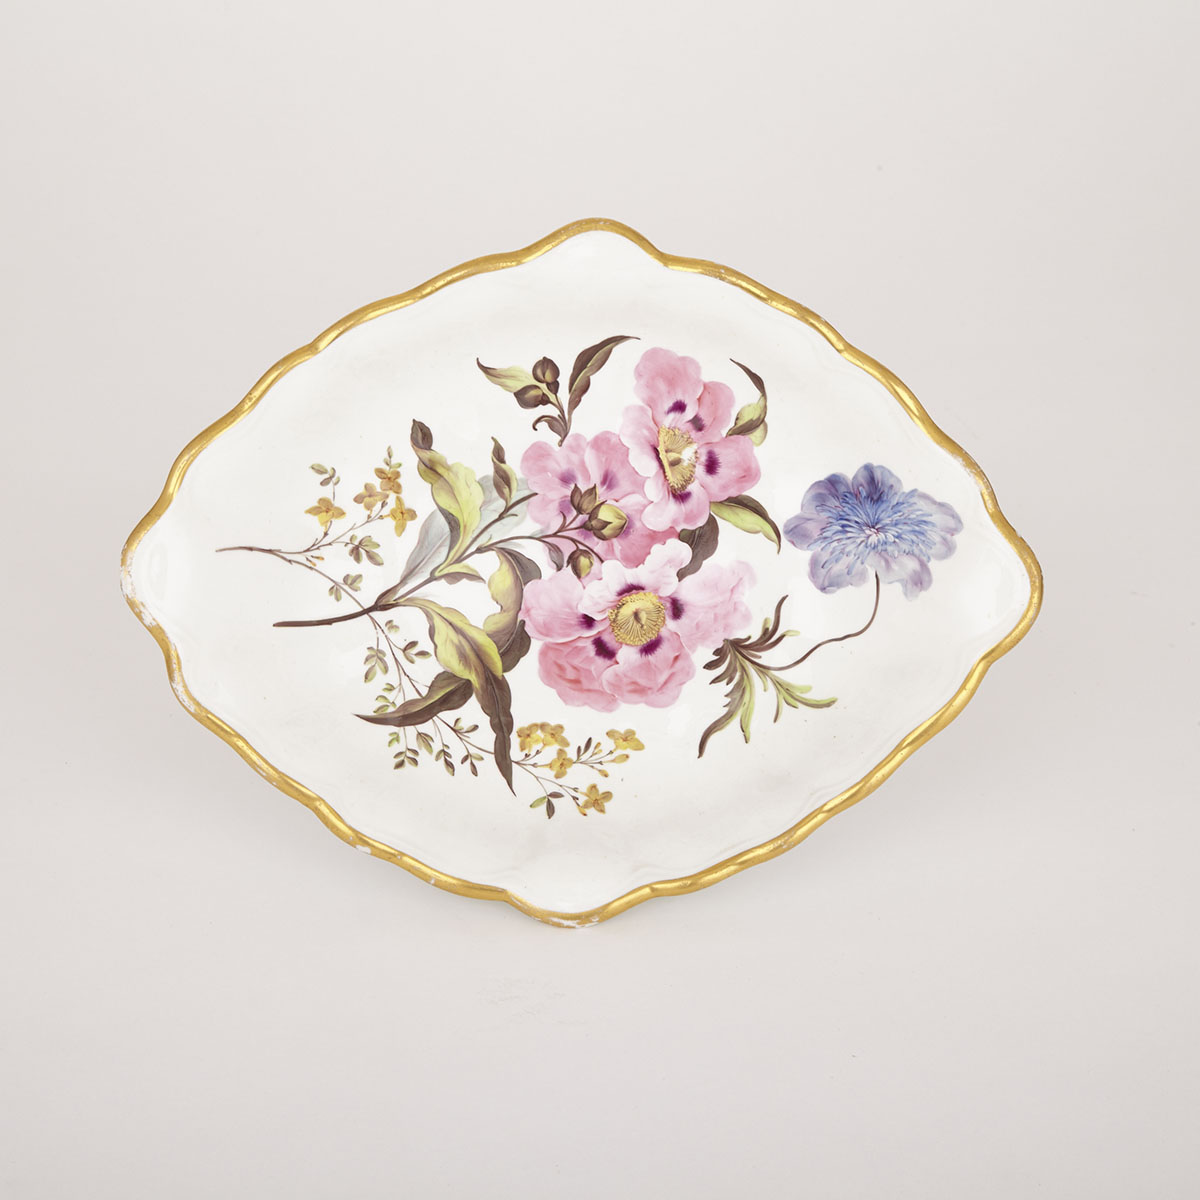 Derby Porcelain Botanical Oval Dish, William ‘Quaker’ Pegg, c.1813-20